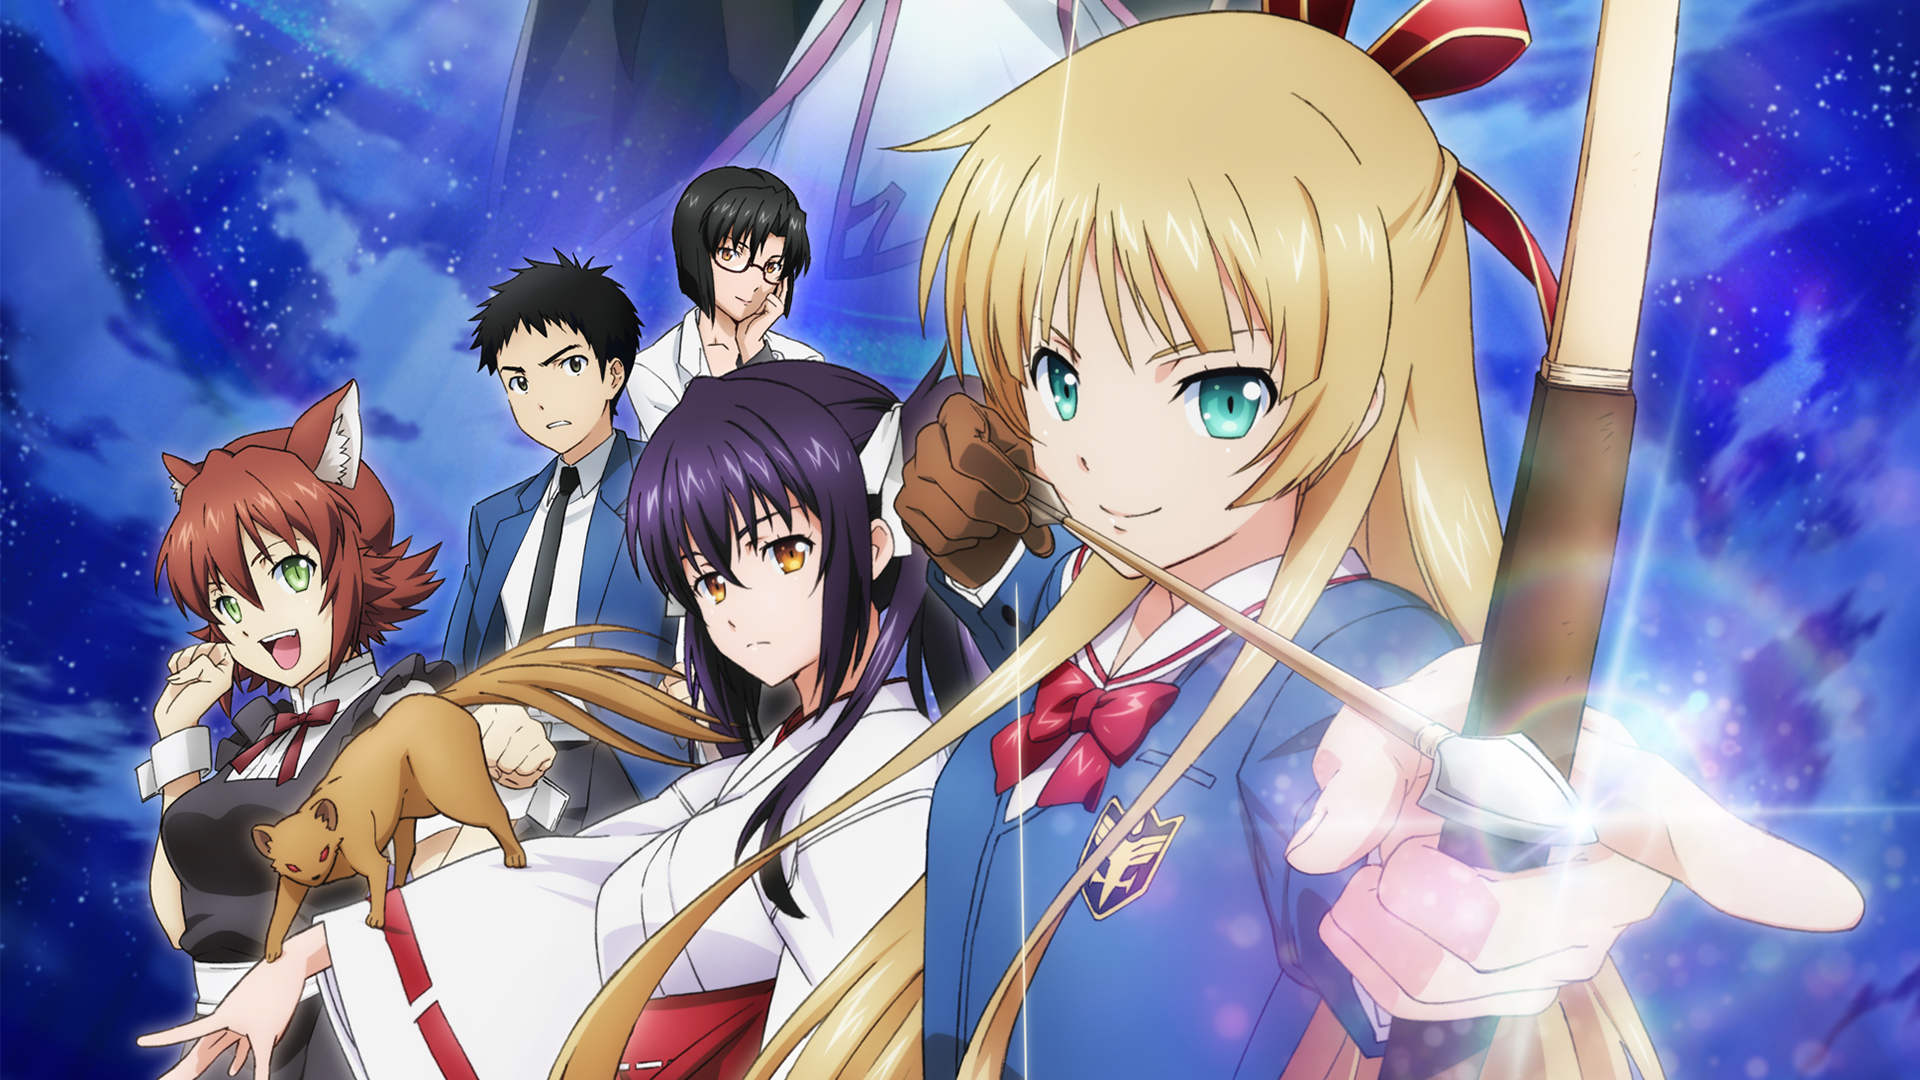 Anime Isuca HD Wallpaper | Background Image